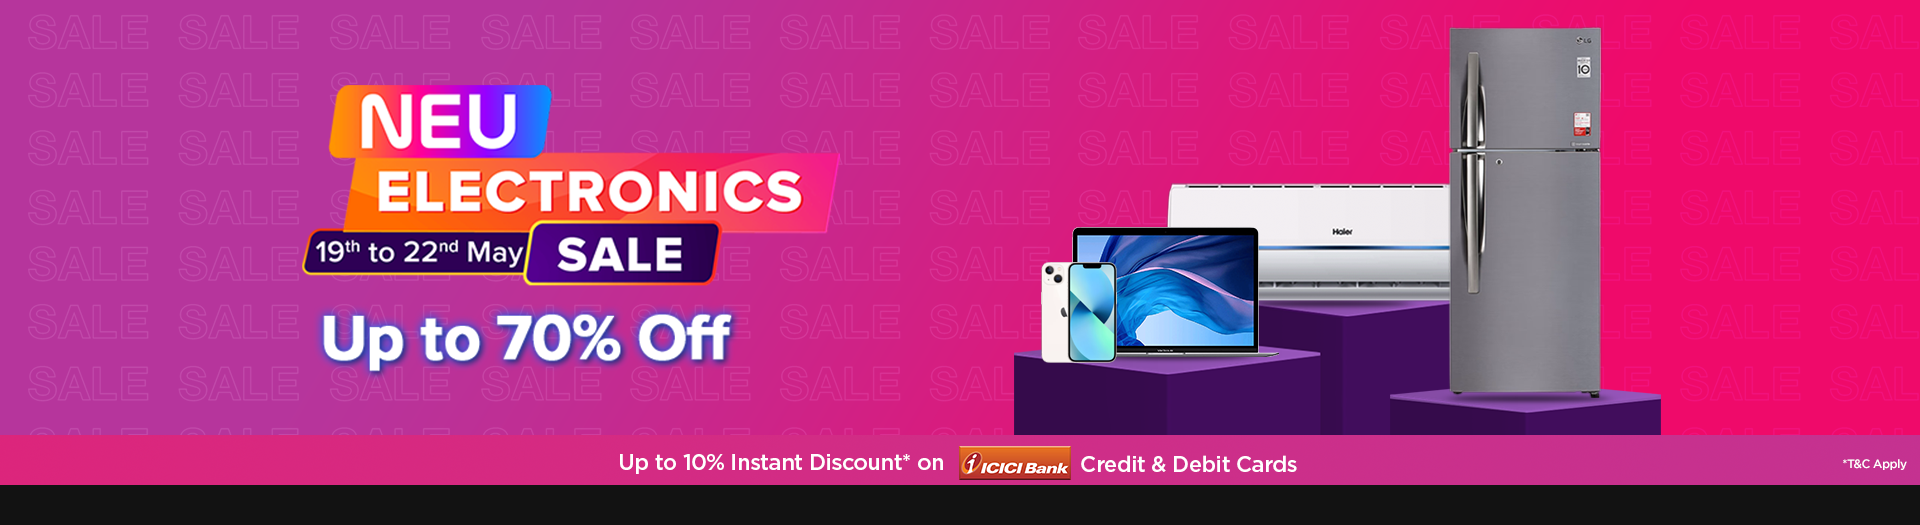 croma.com - Neu Electronics Sale – Get Up To 70% Discount